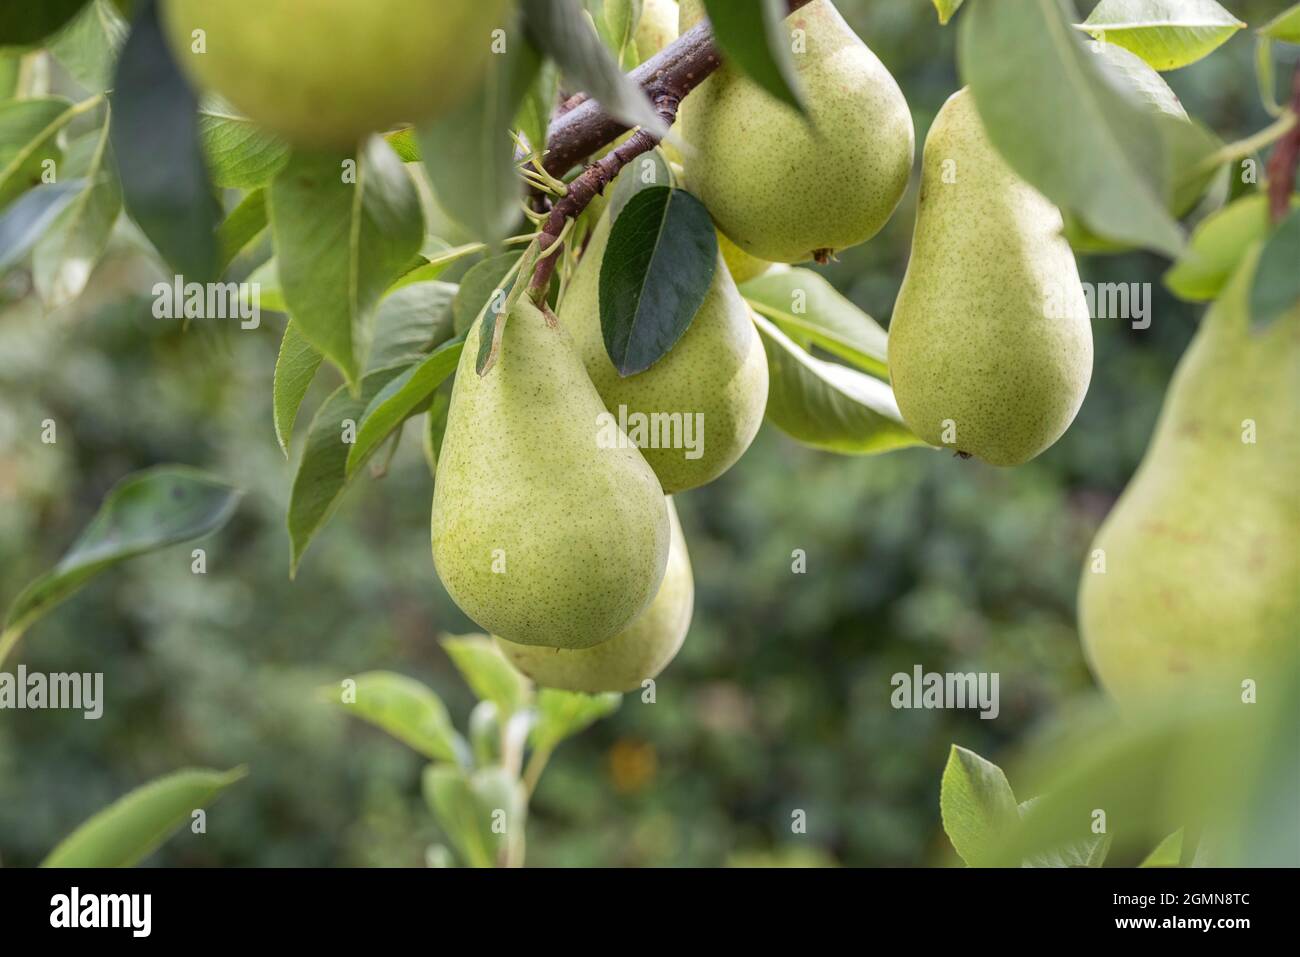 Common pear (Pyrus communis 'Delwilmor', Pyrus communis Delwilmor), pear on a tree, cultivar Delwilmor Stock Photo